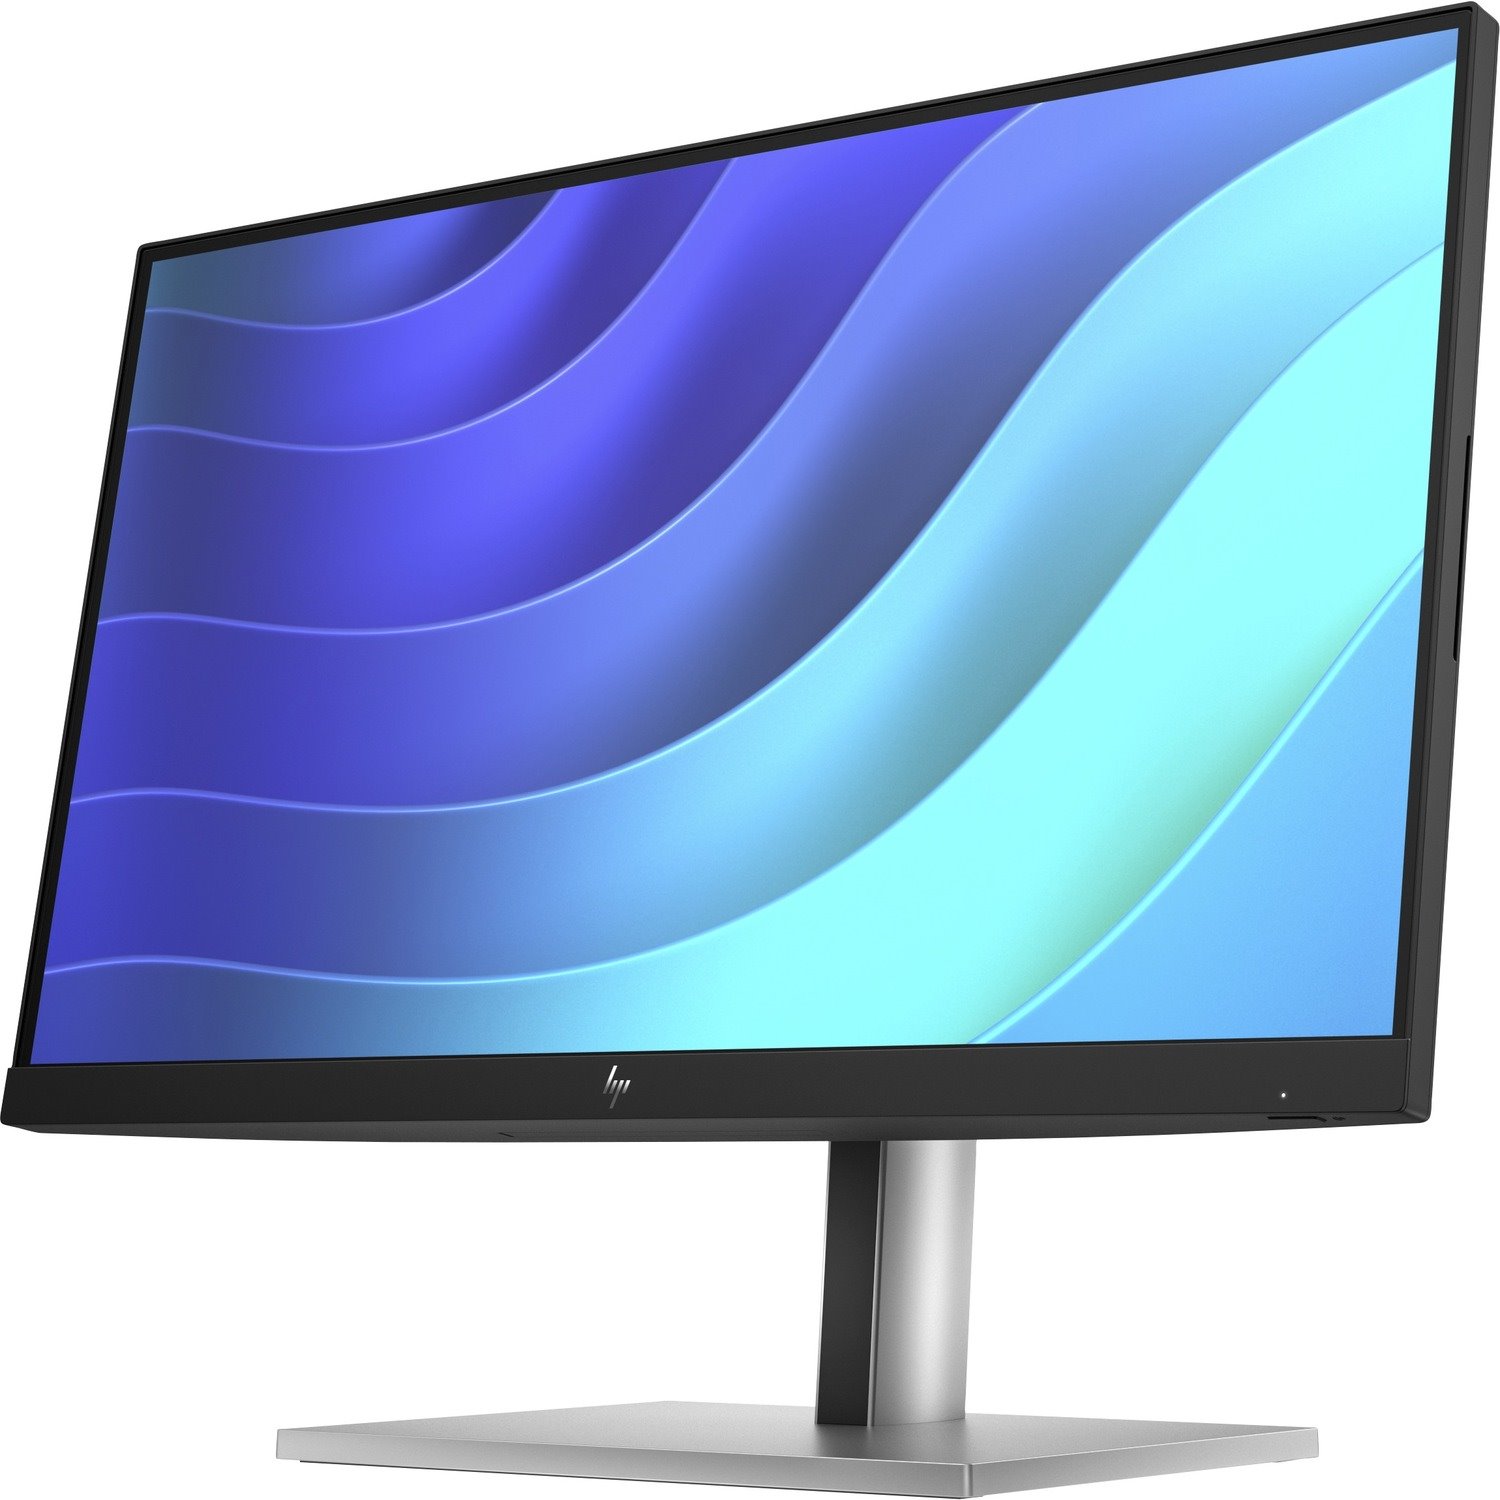 HP 21.5" Full HD Edge LED LCD Monitor - 16:9 - Black